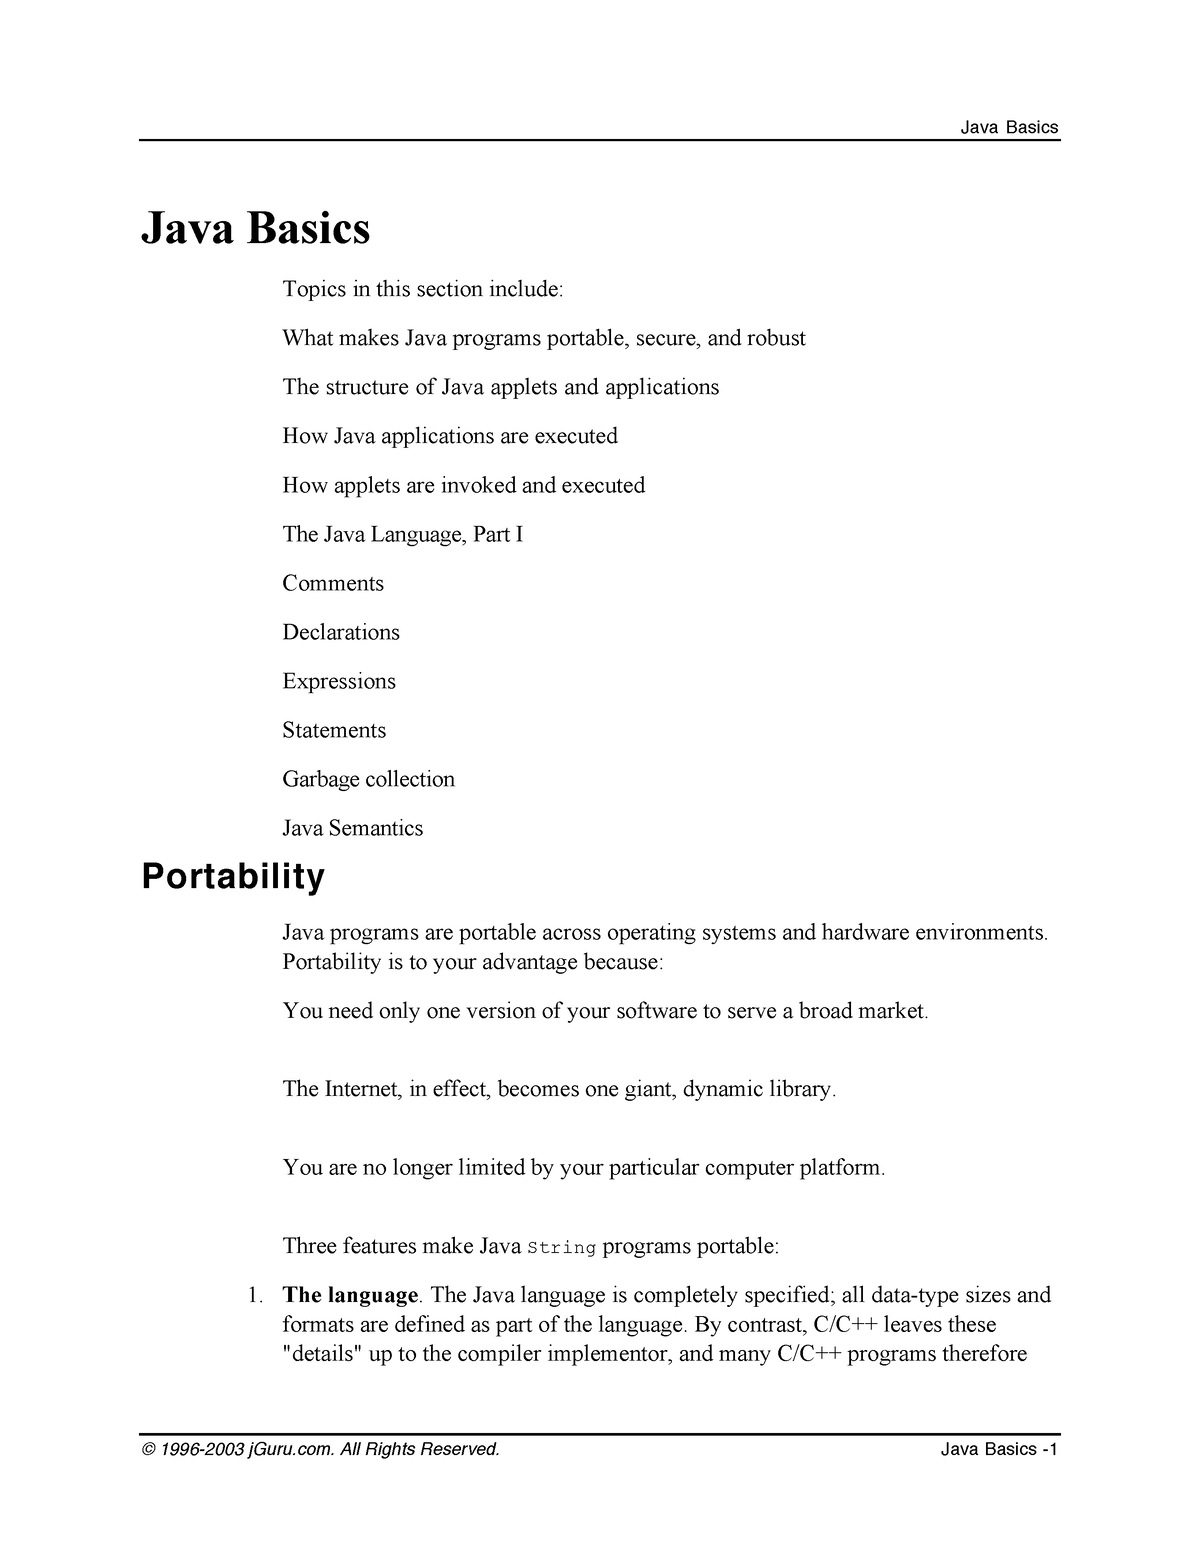 Java Basics Notes Basic Of Java Java Basics Java Basics Topics In This Section Include What 3582